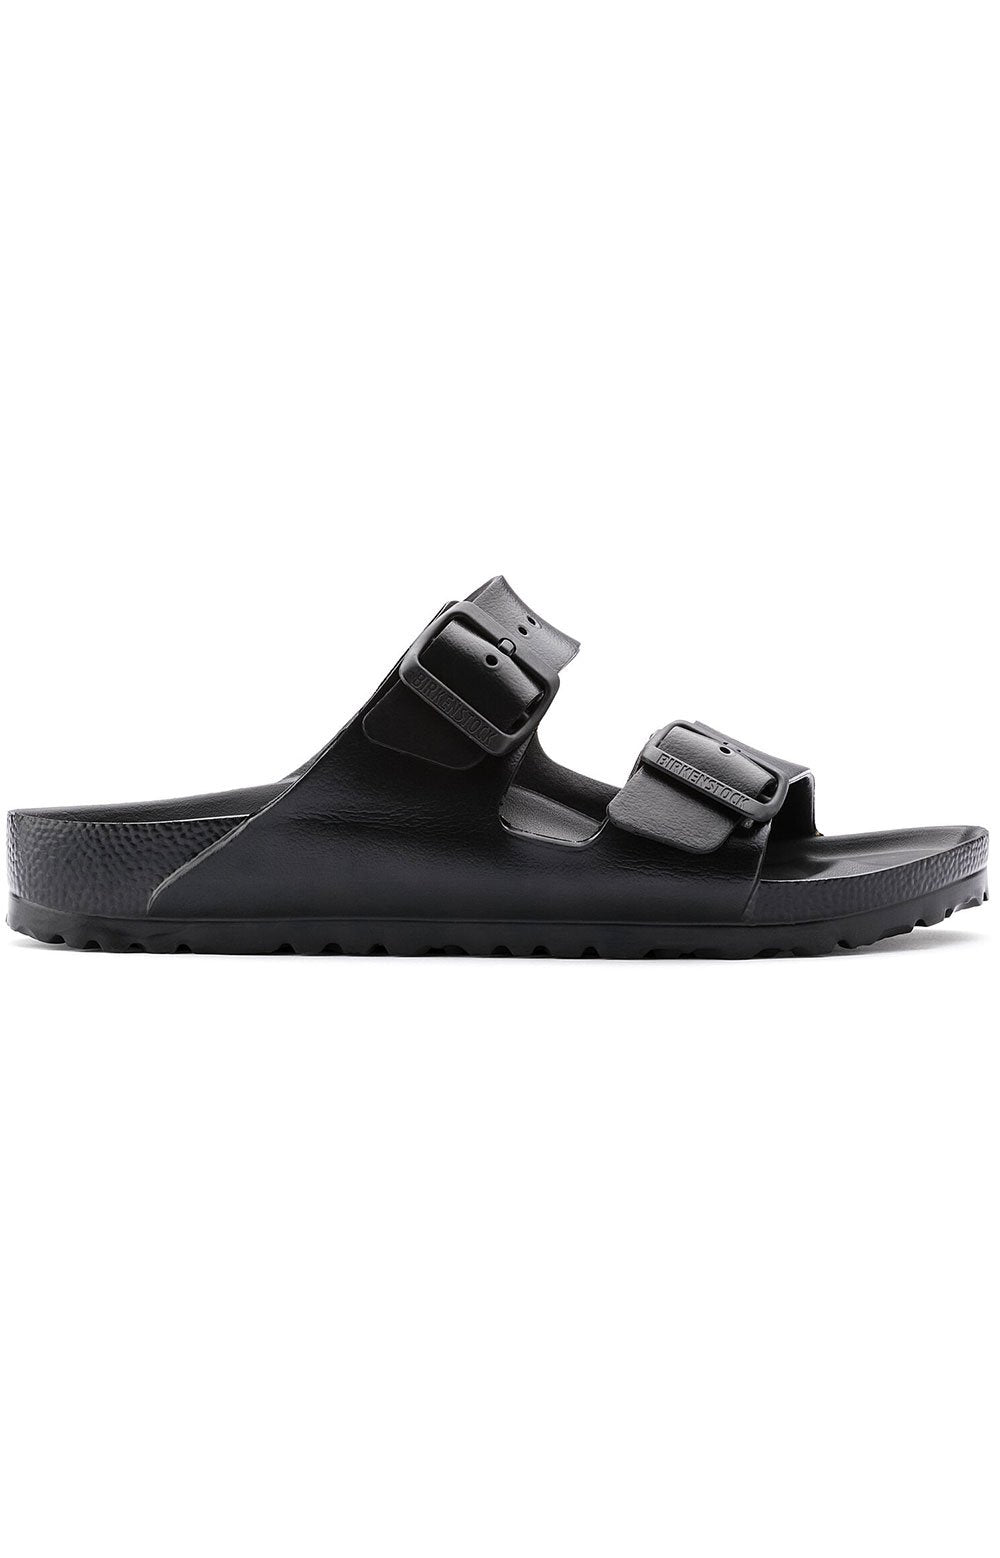 (0129421) Arizona EVA Sandals - Black